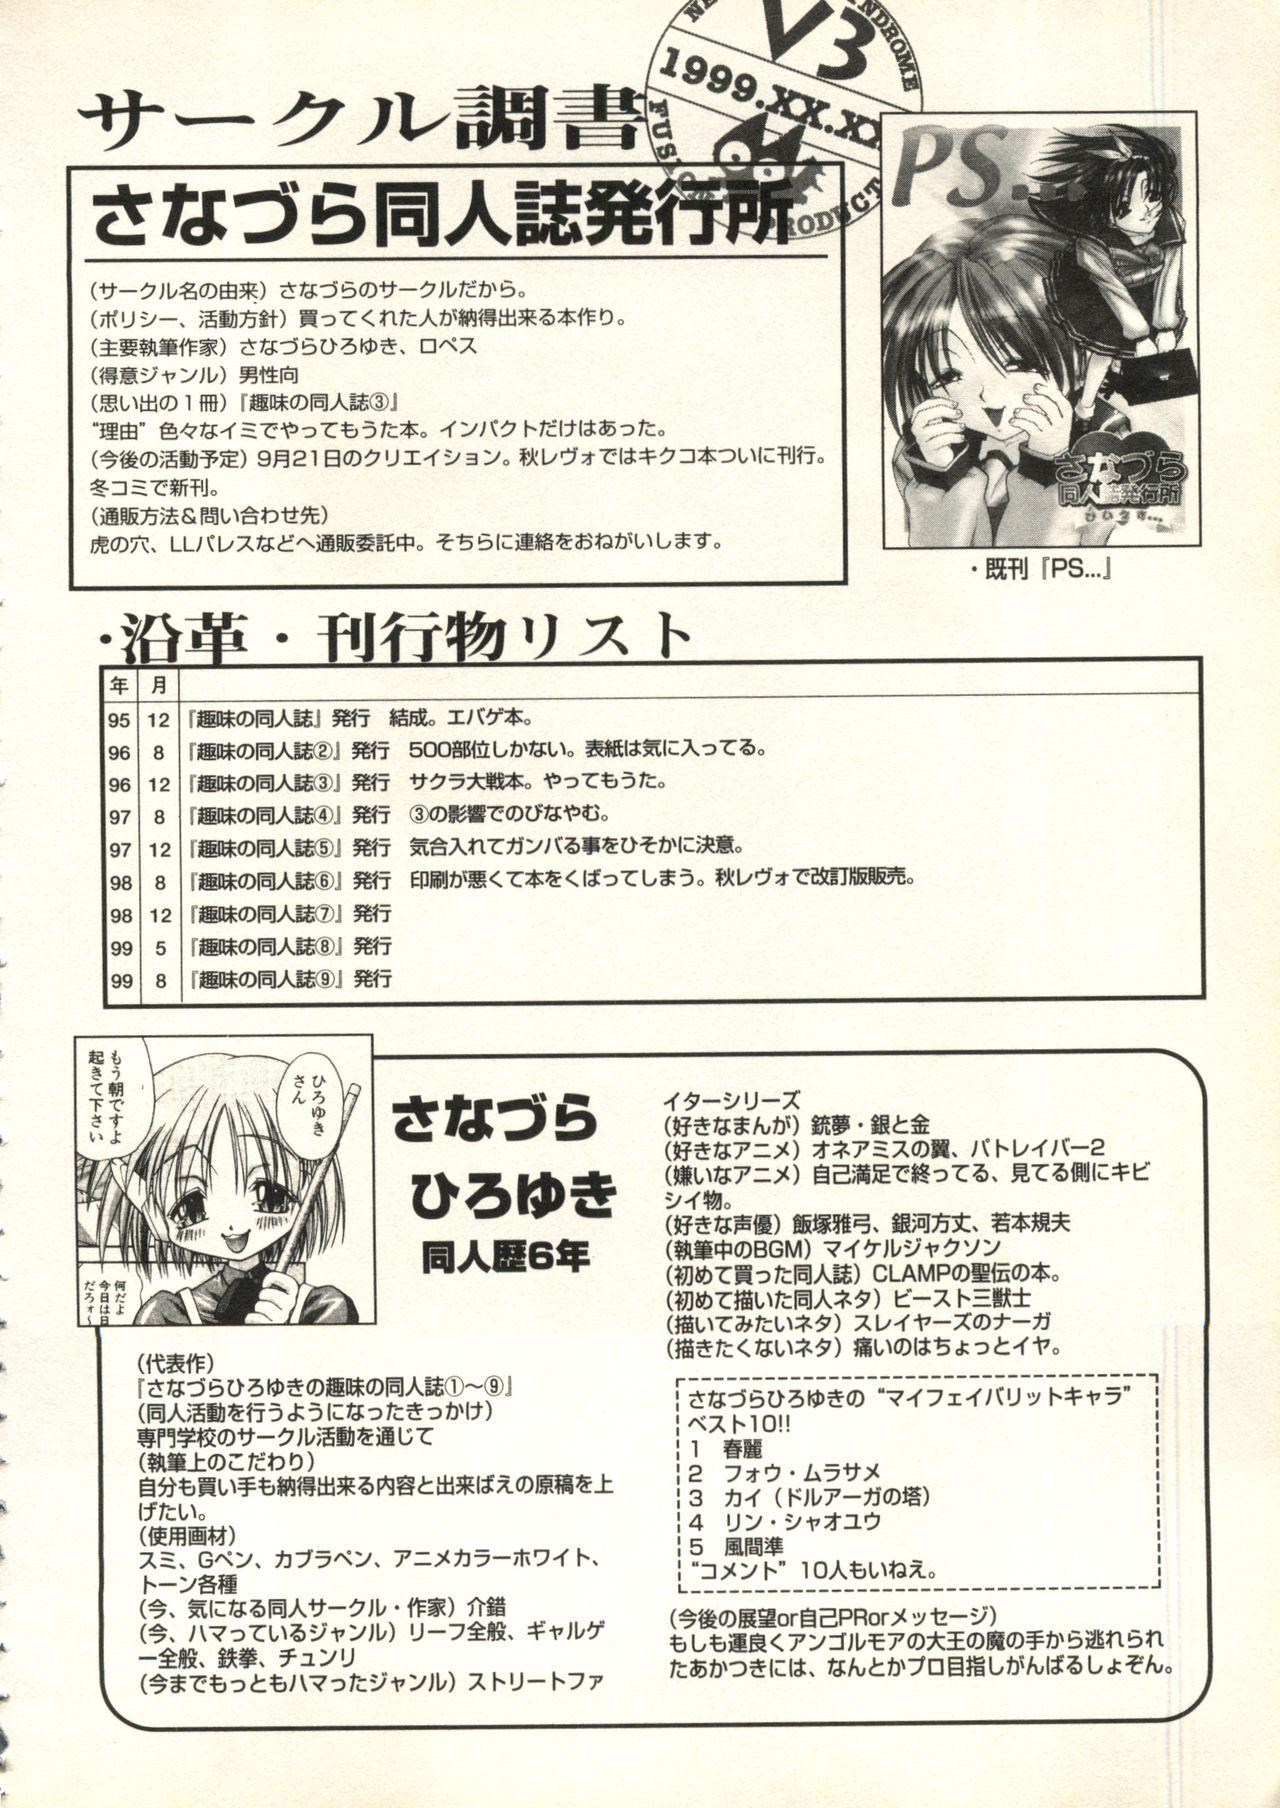 [Anthology] Bishoujo Shoukougun V3 (1) '99 Summer Edition (Various) 56